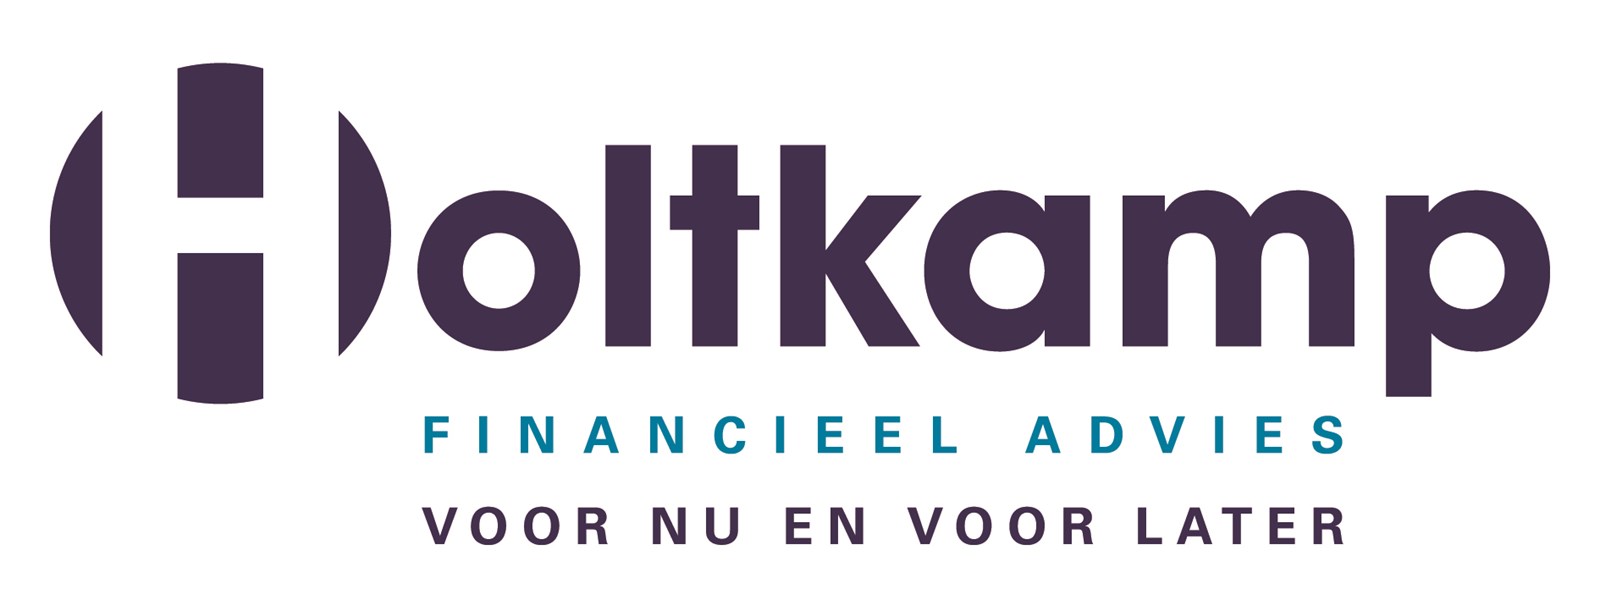 Logo van Holtkamp Financieel Advies